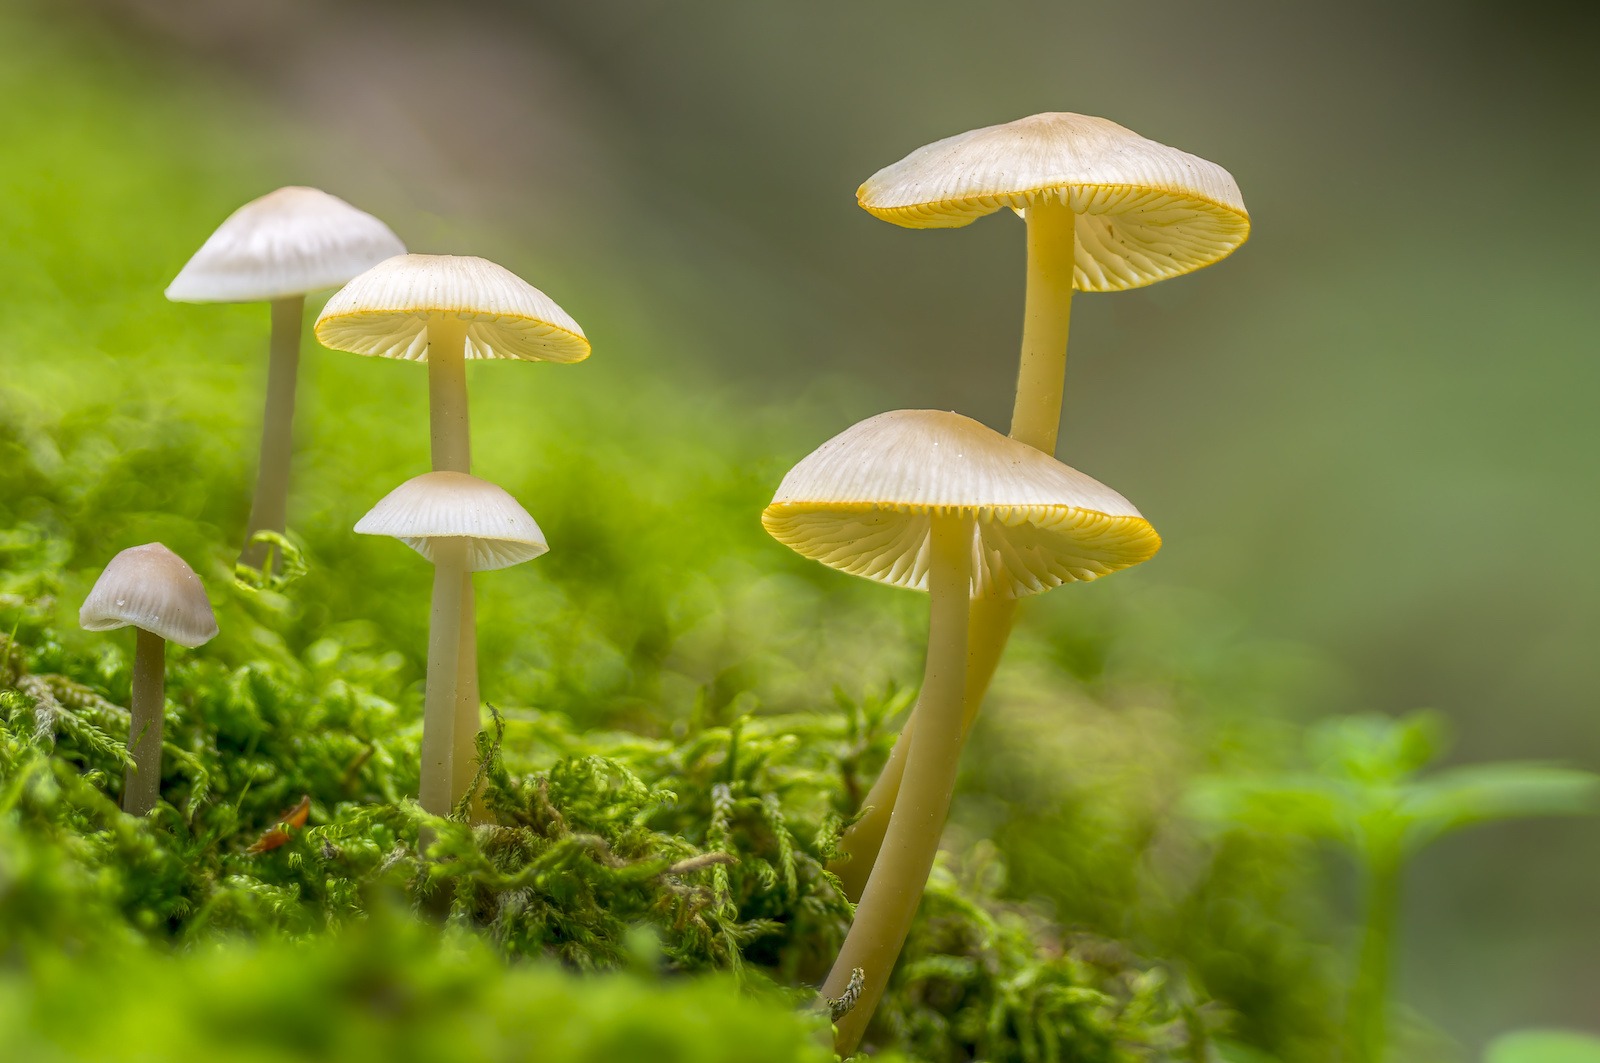 what do mushrooms look like magic